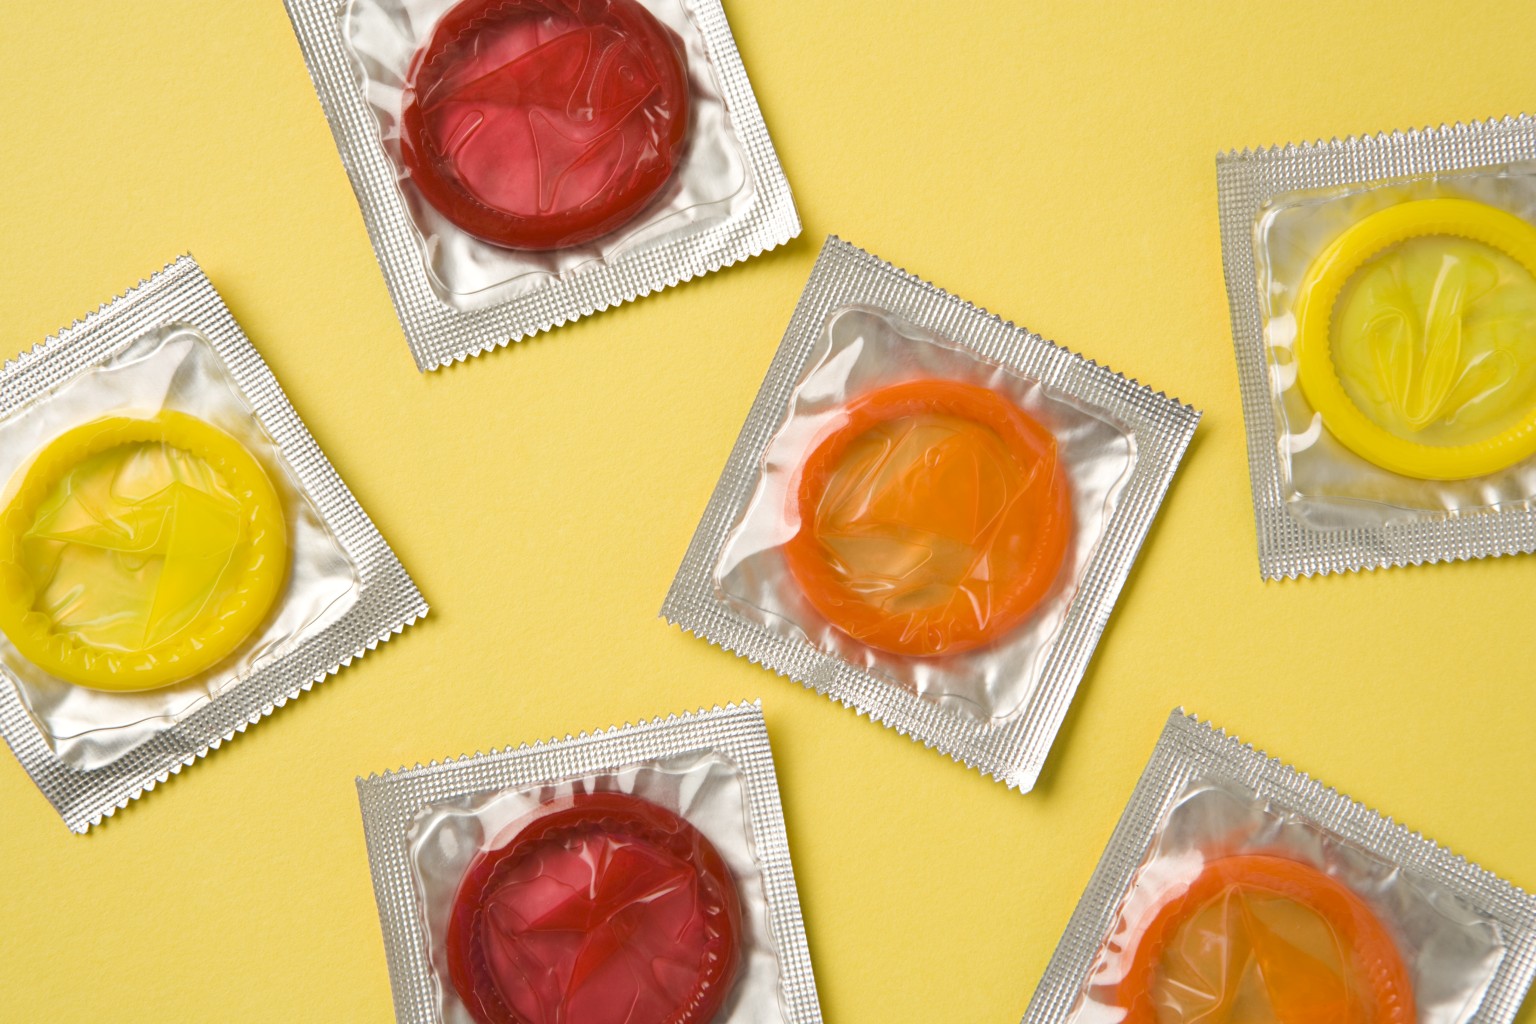 Chicago High Schools Expanding Free Condoms Program